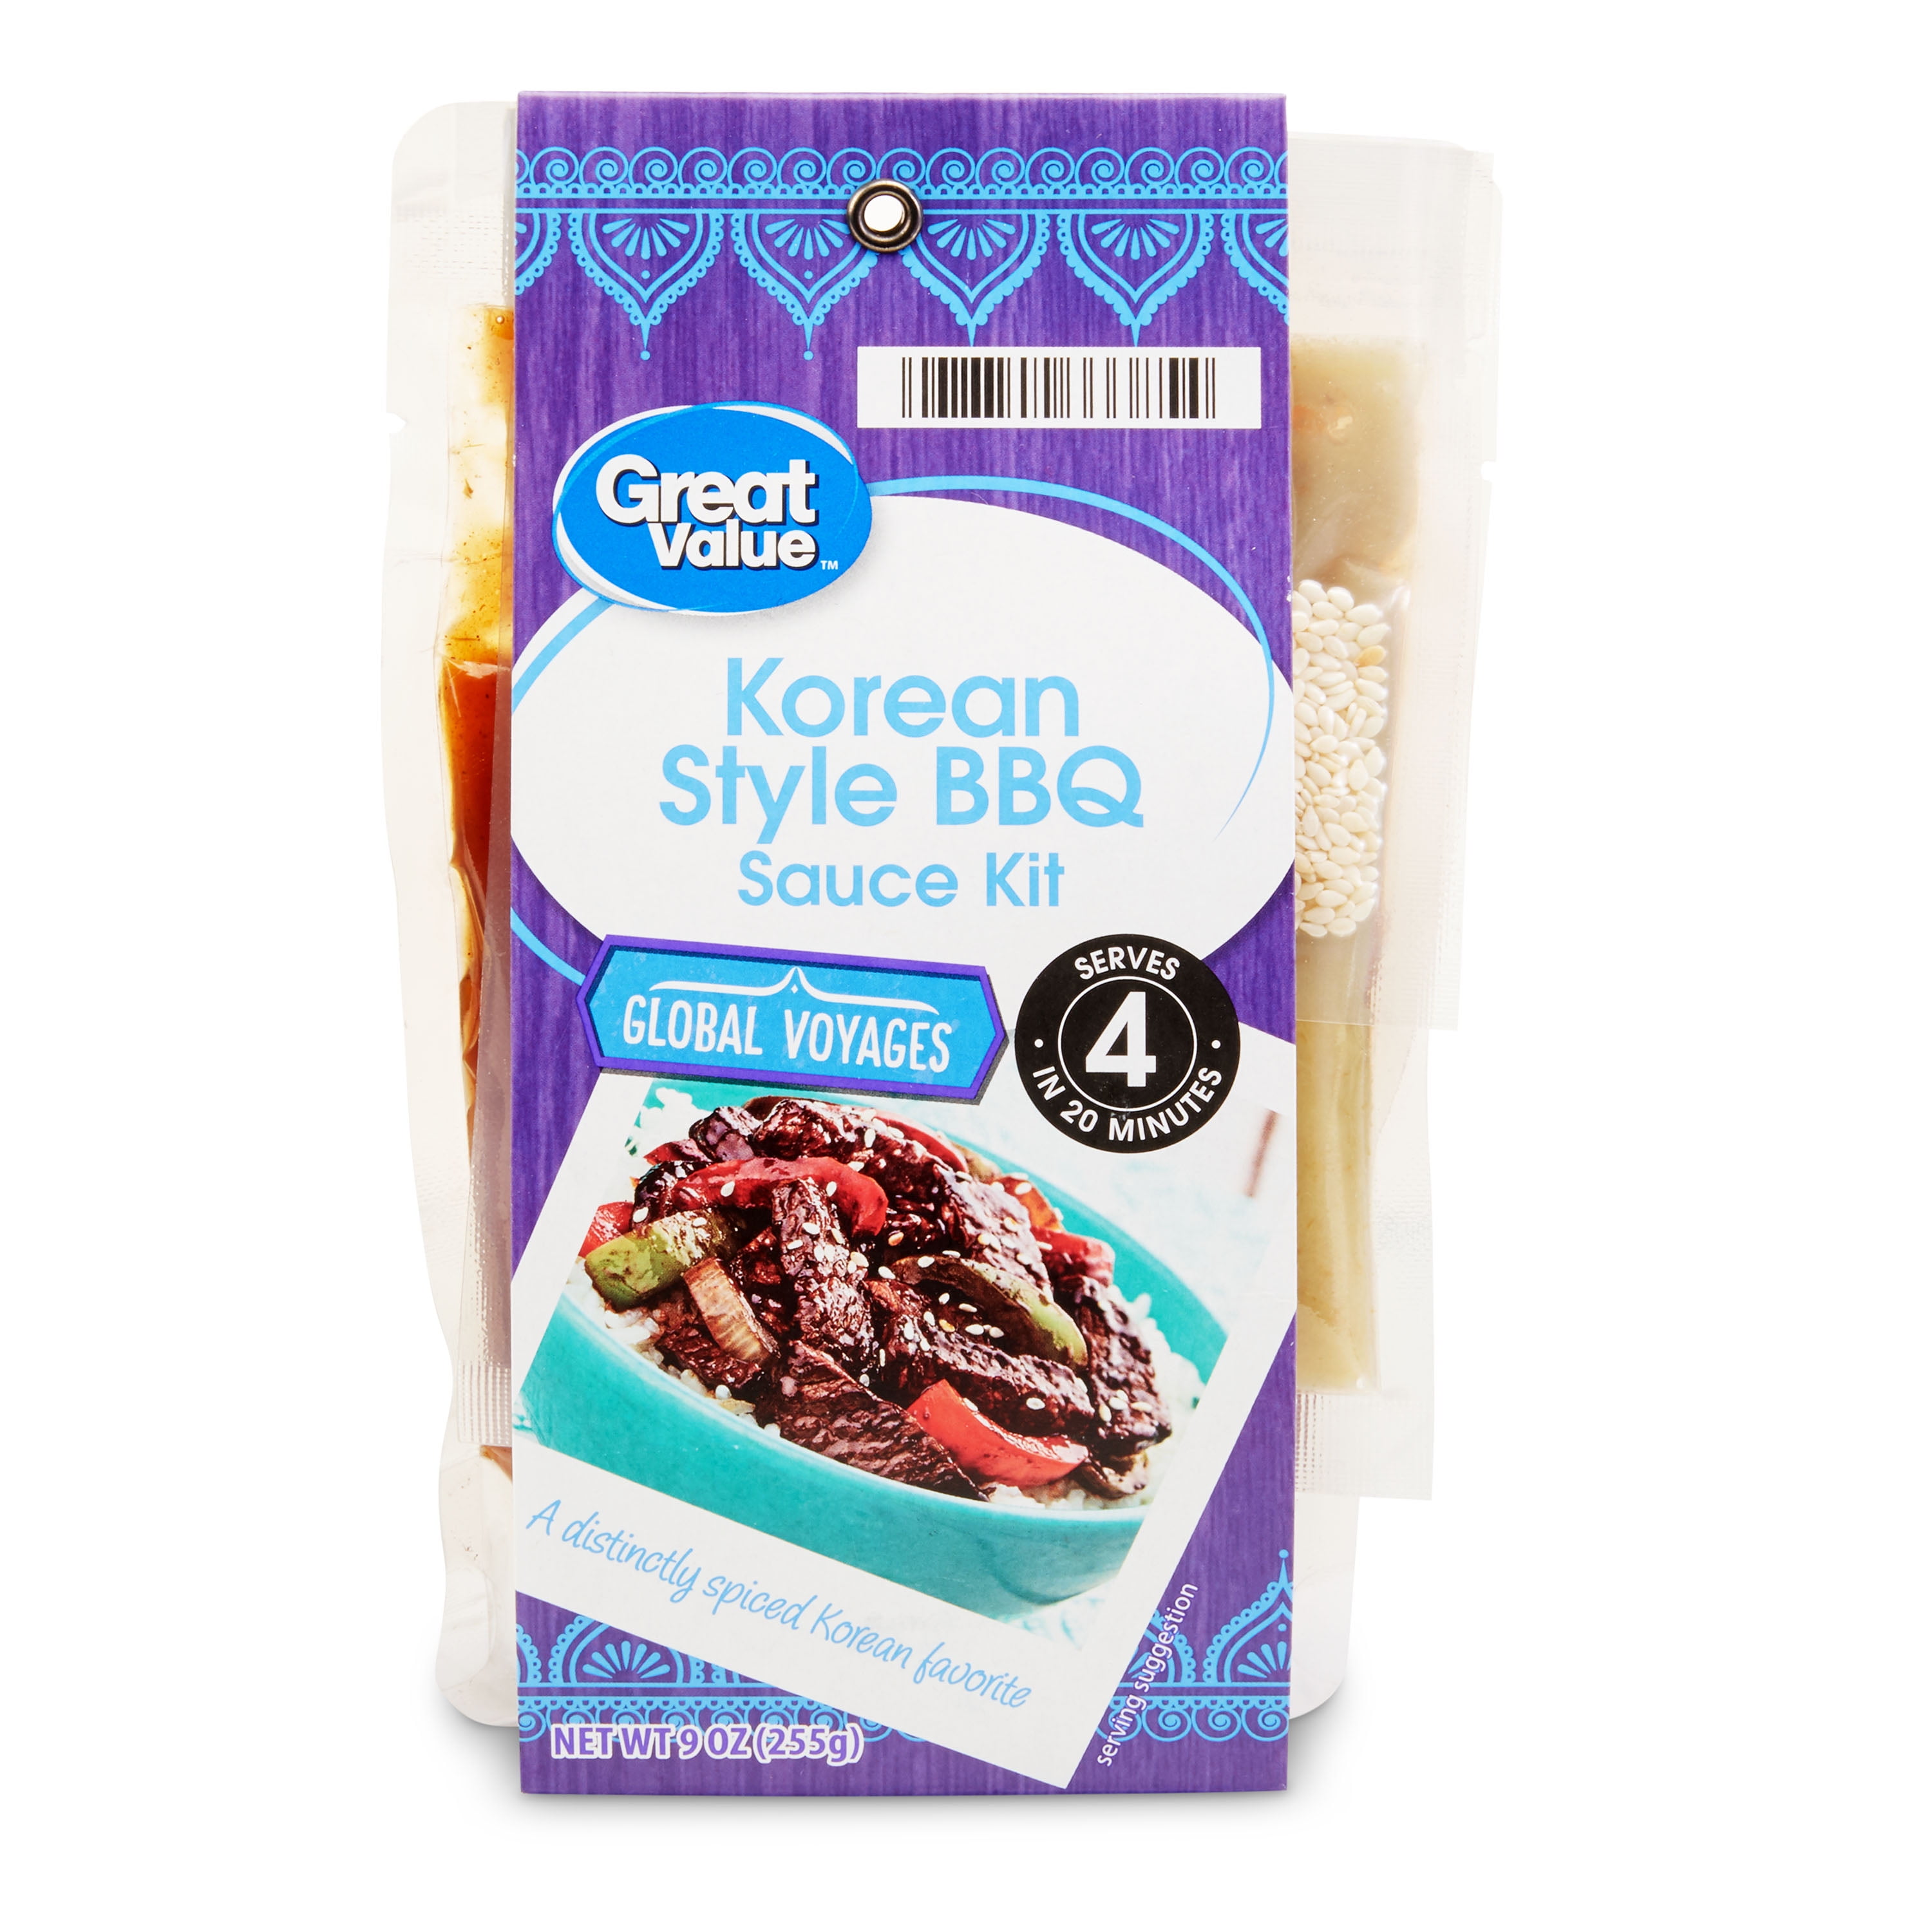 Great Value Korean Style BBQ Sauce Kit, 9 oz